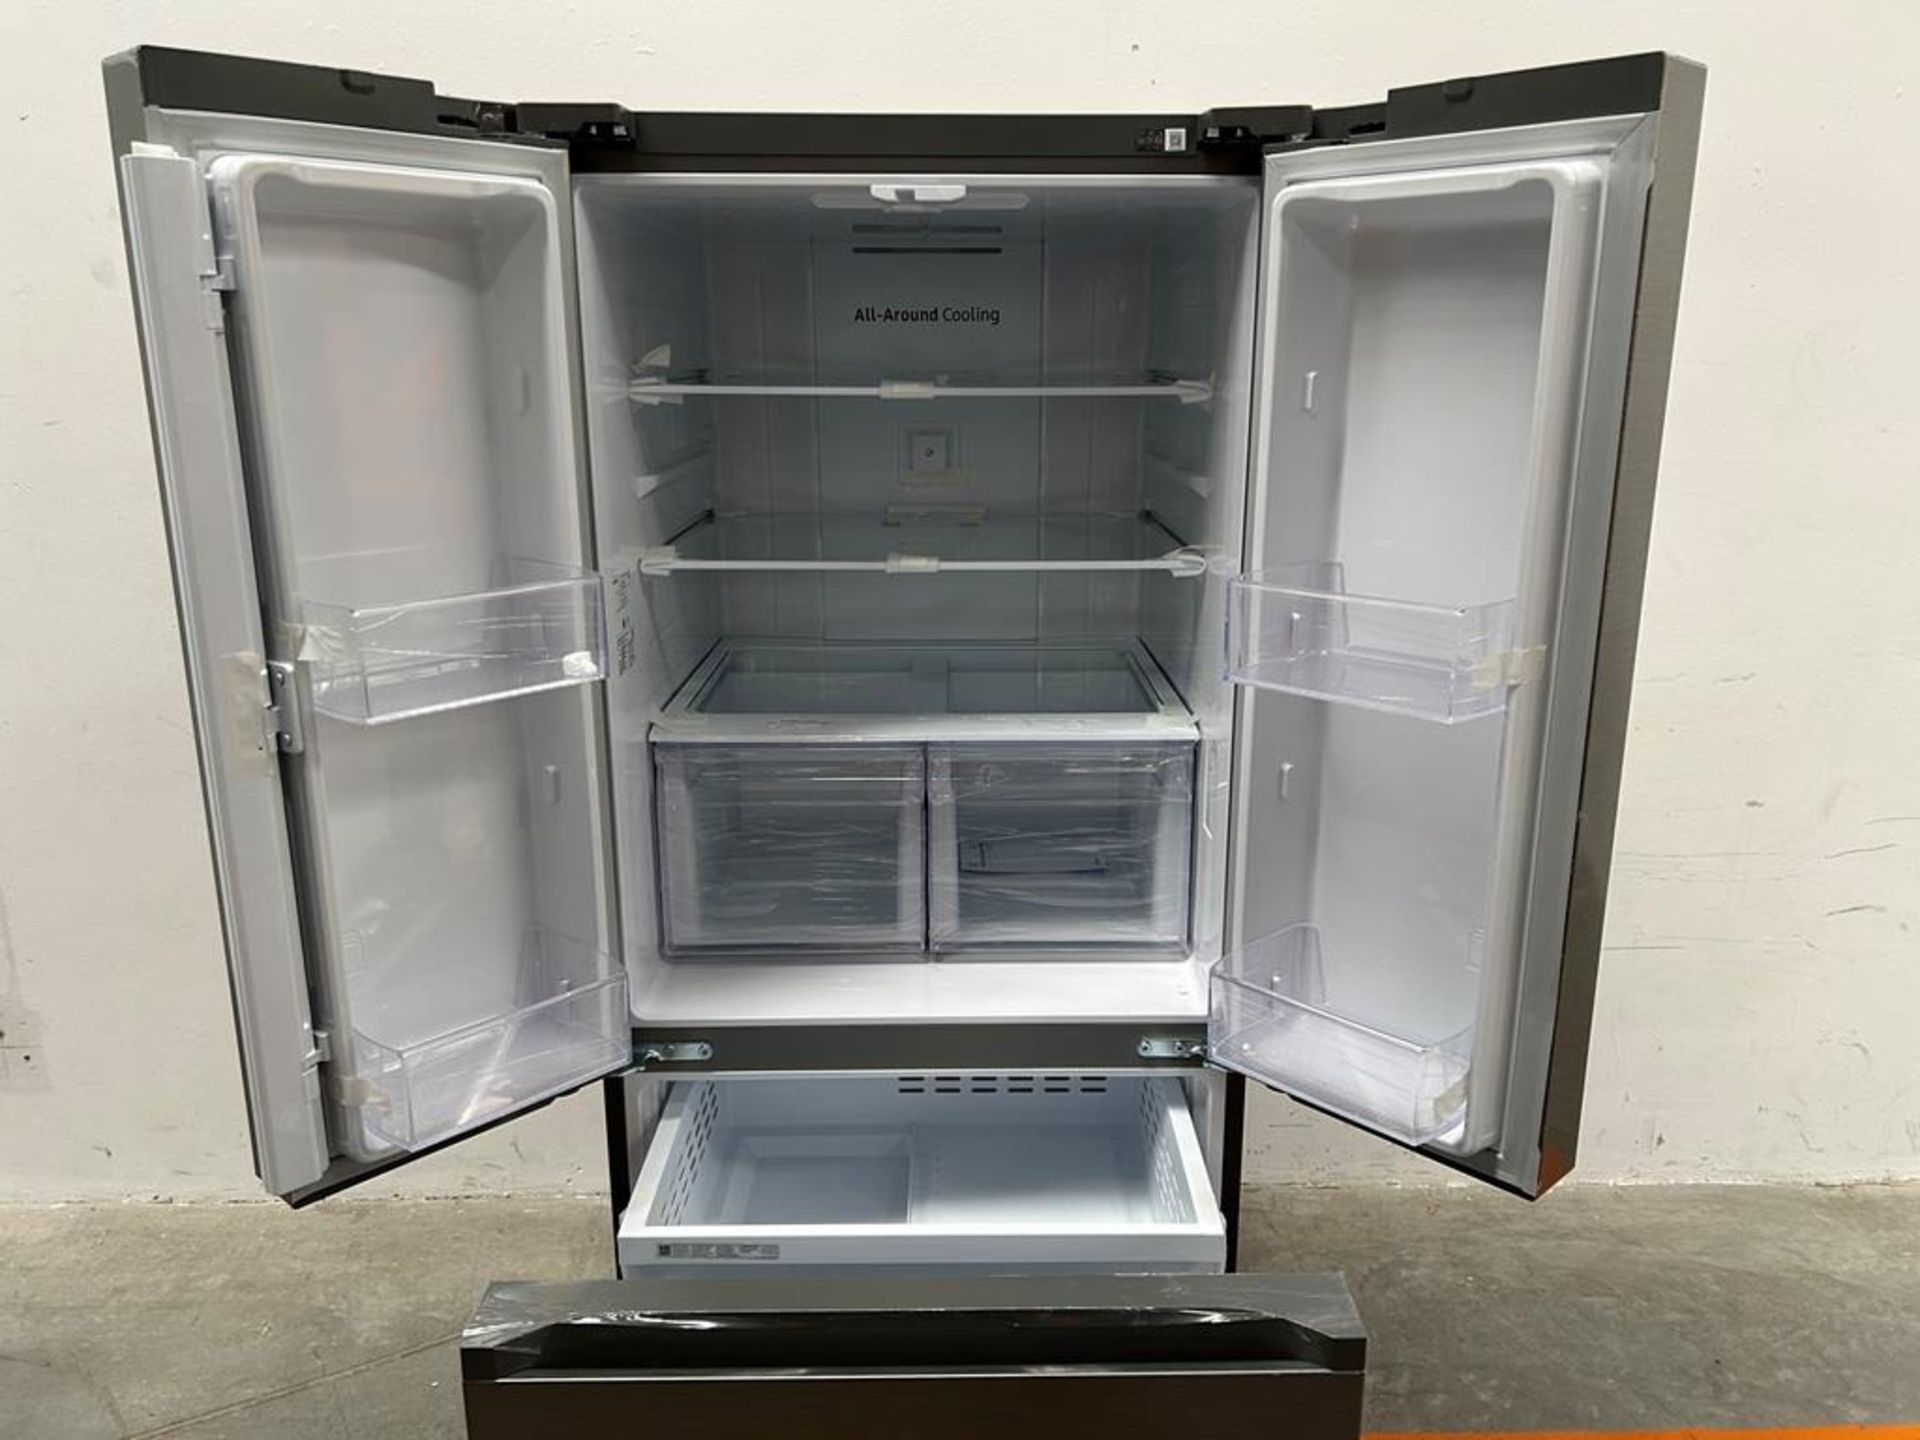 (NUEVO) Refrigerador Marca SAMSUNG, Modelo RF22A4010S9, Serie 00216L, Color GRIS - Image 4 of 11